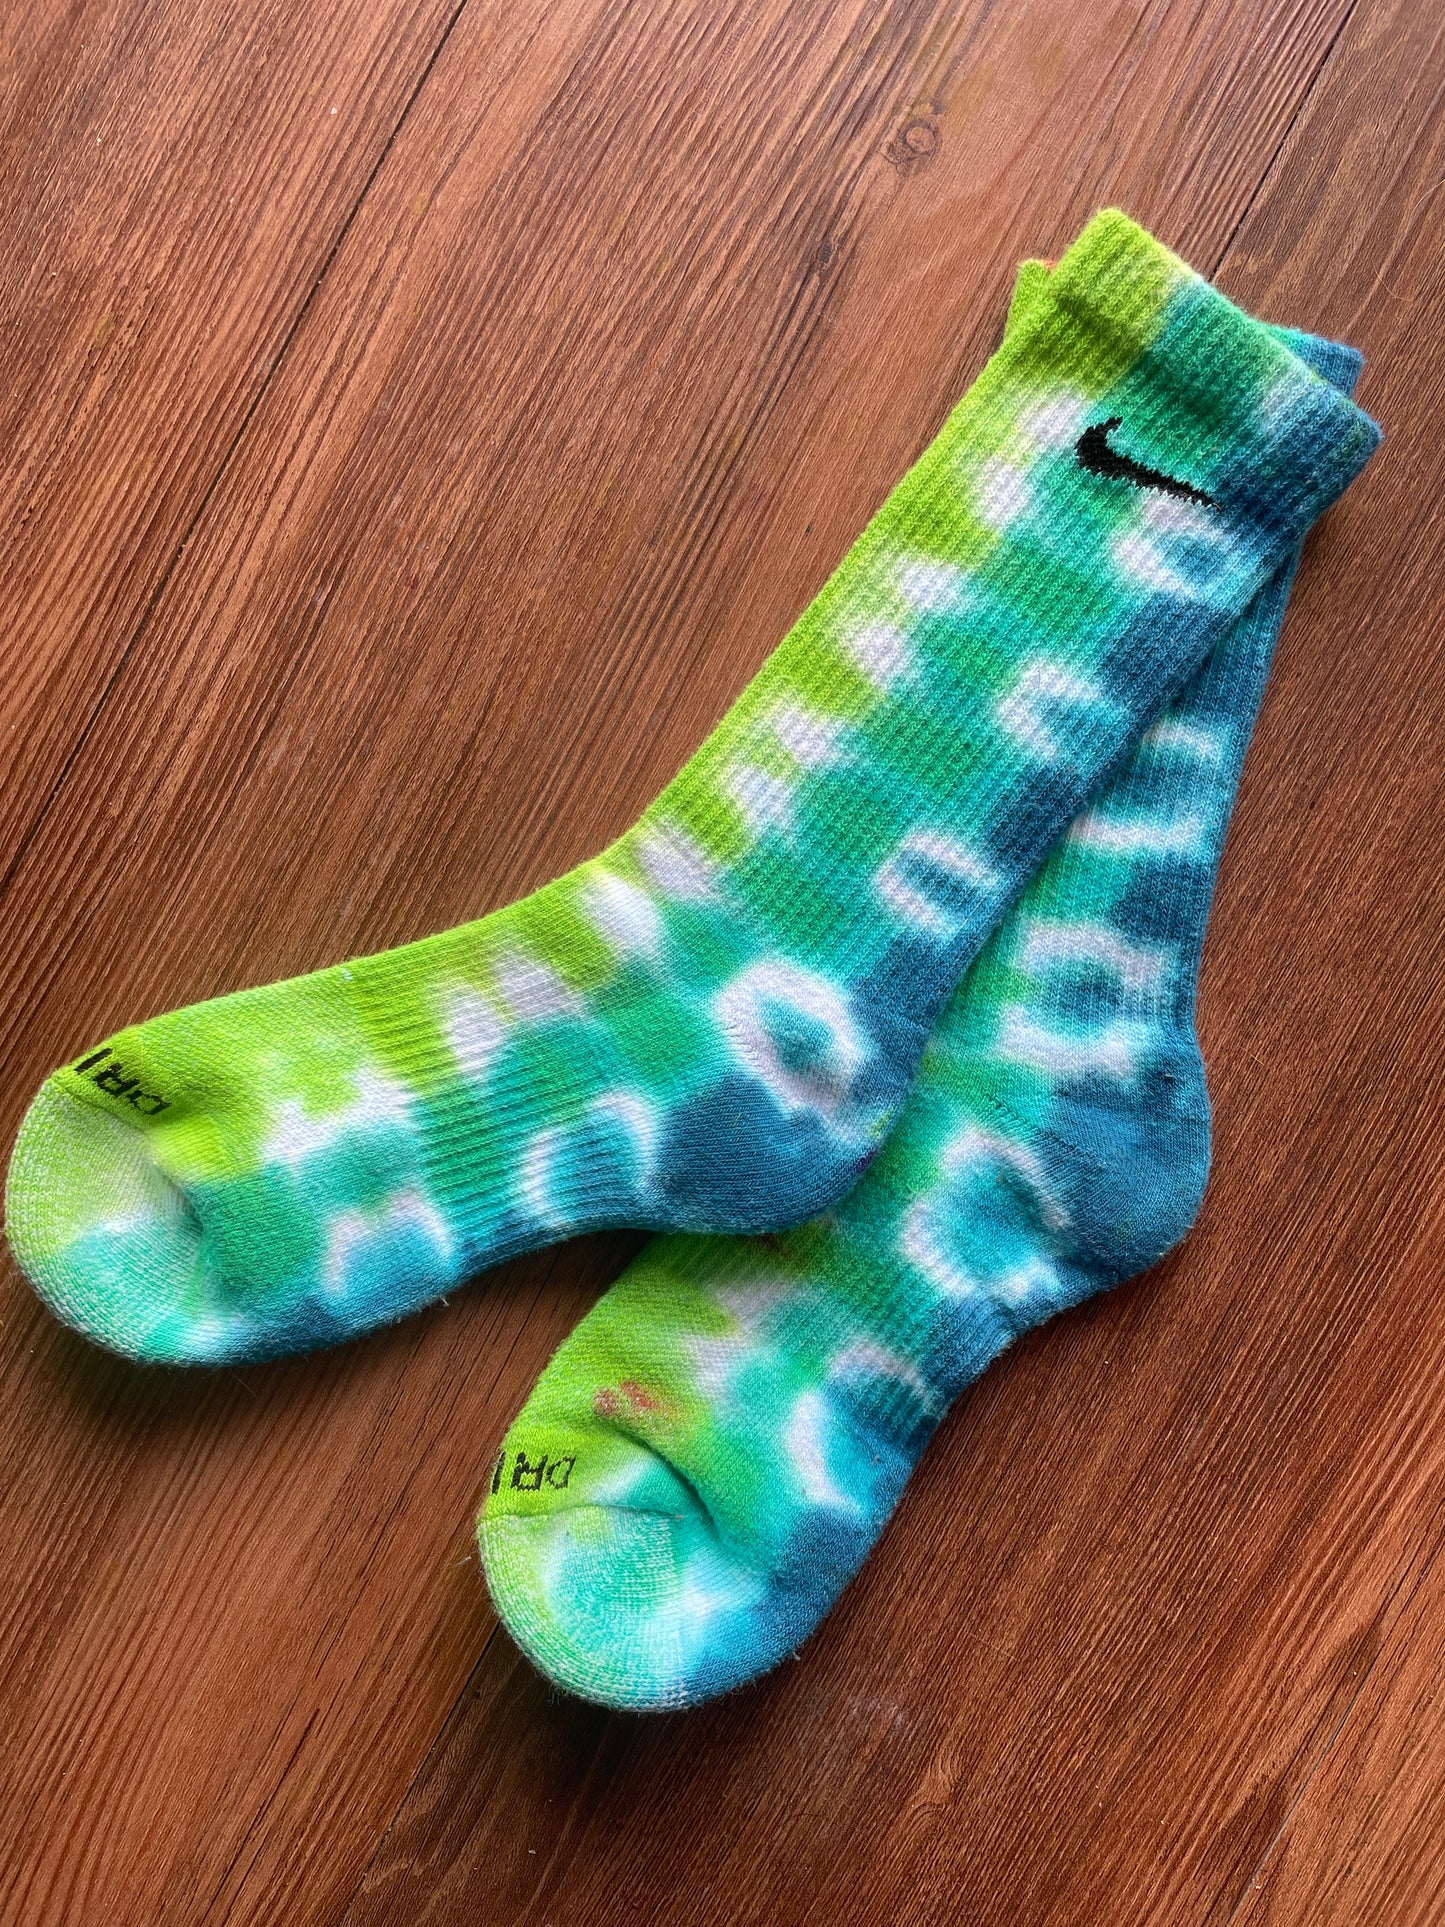 Blue, Green, and Teal Tie Dye Nike Dri-FIT Training Socks - Size Medium (Men's 6-8/Women's 7-10)